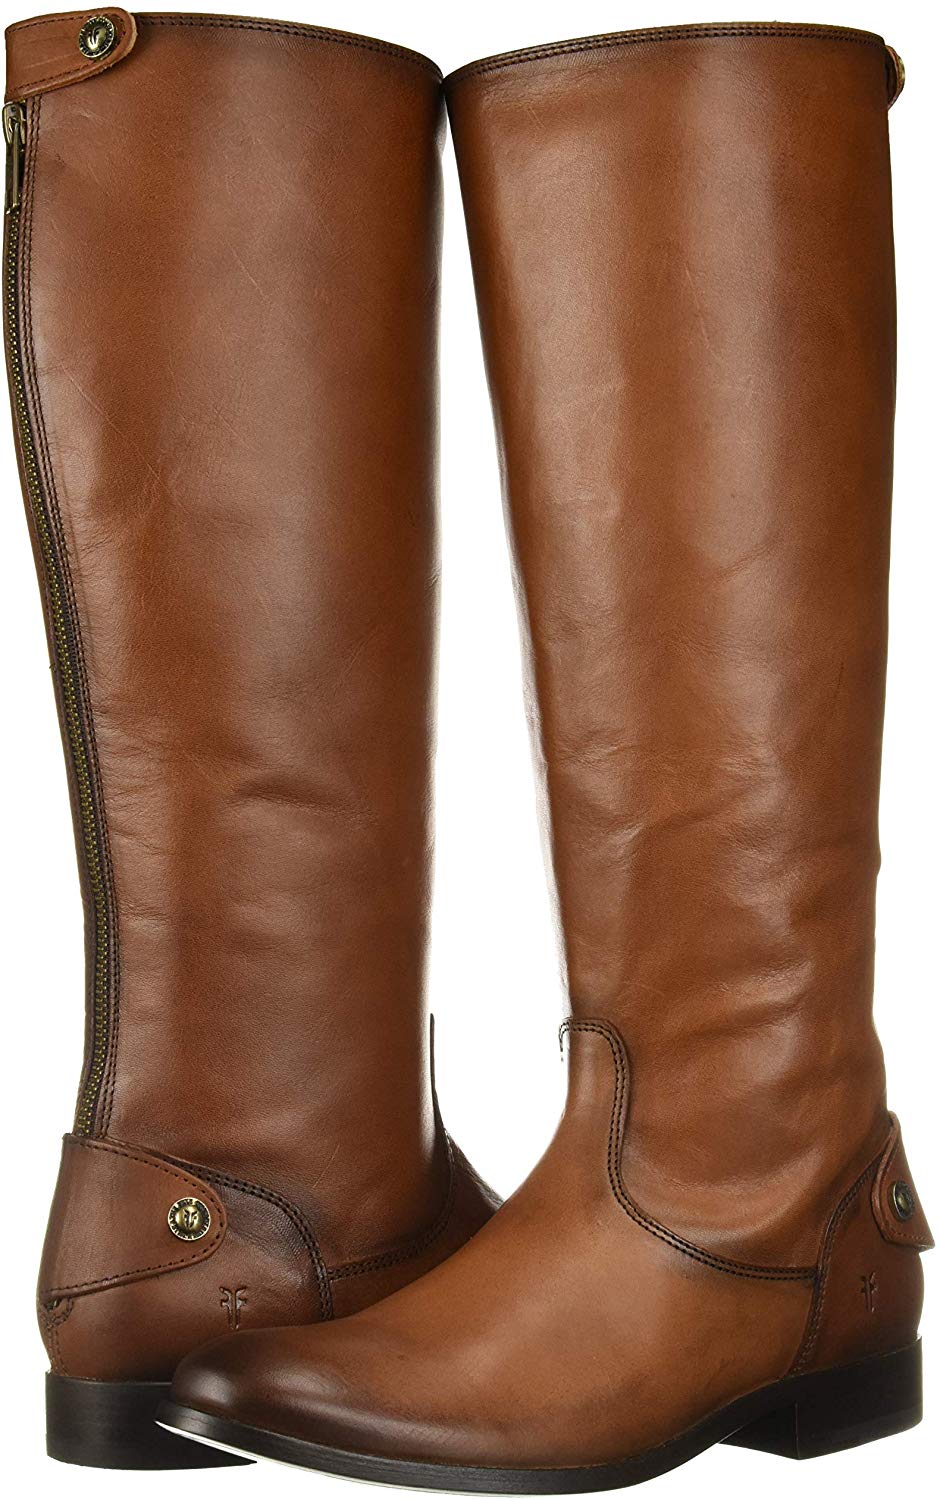 Frye Women's Melissa Button Back Zip Knee High Boot, Cognac Extended, Size 10.0 190918112190 eBay